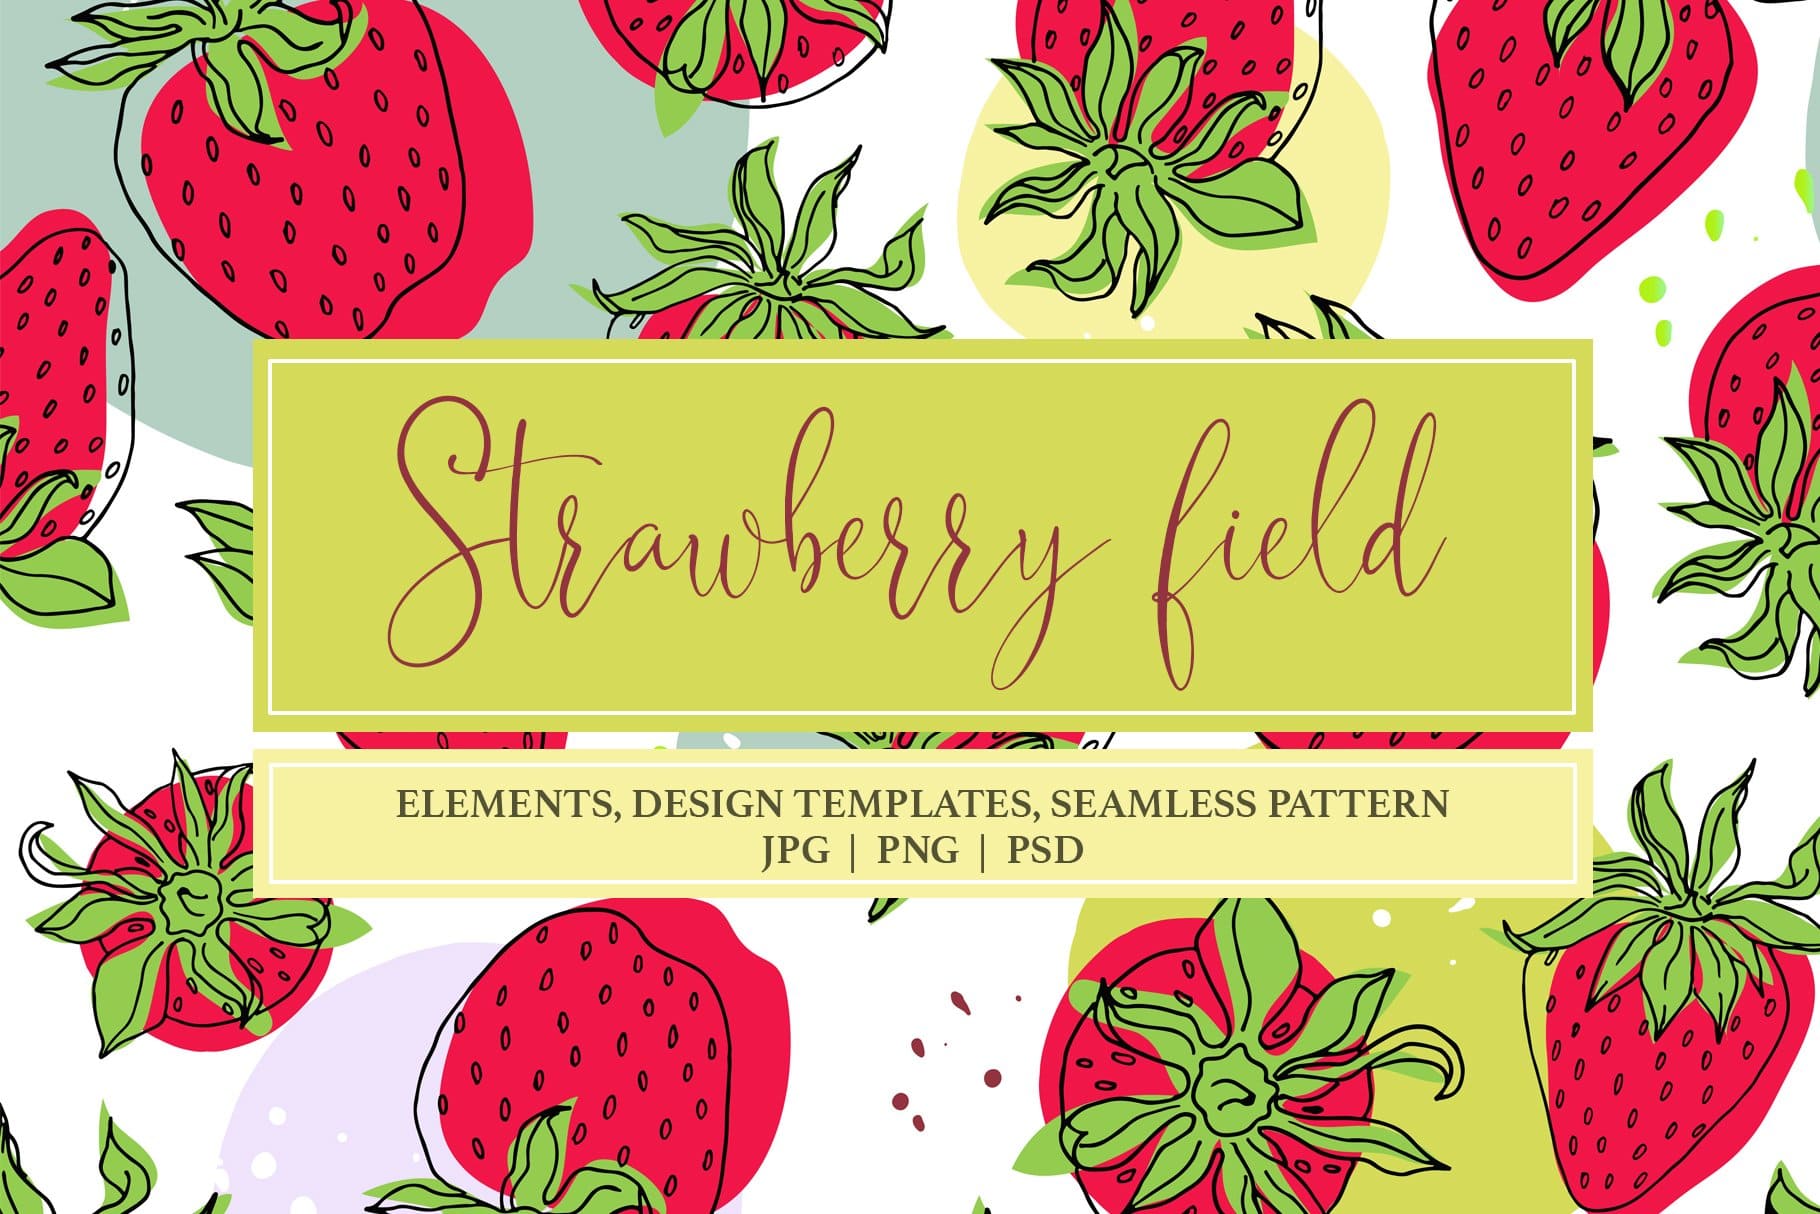 Strawberry field elements, design templates, seamless patterns.